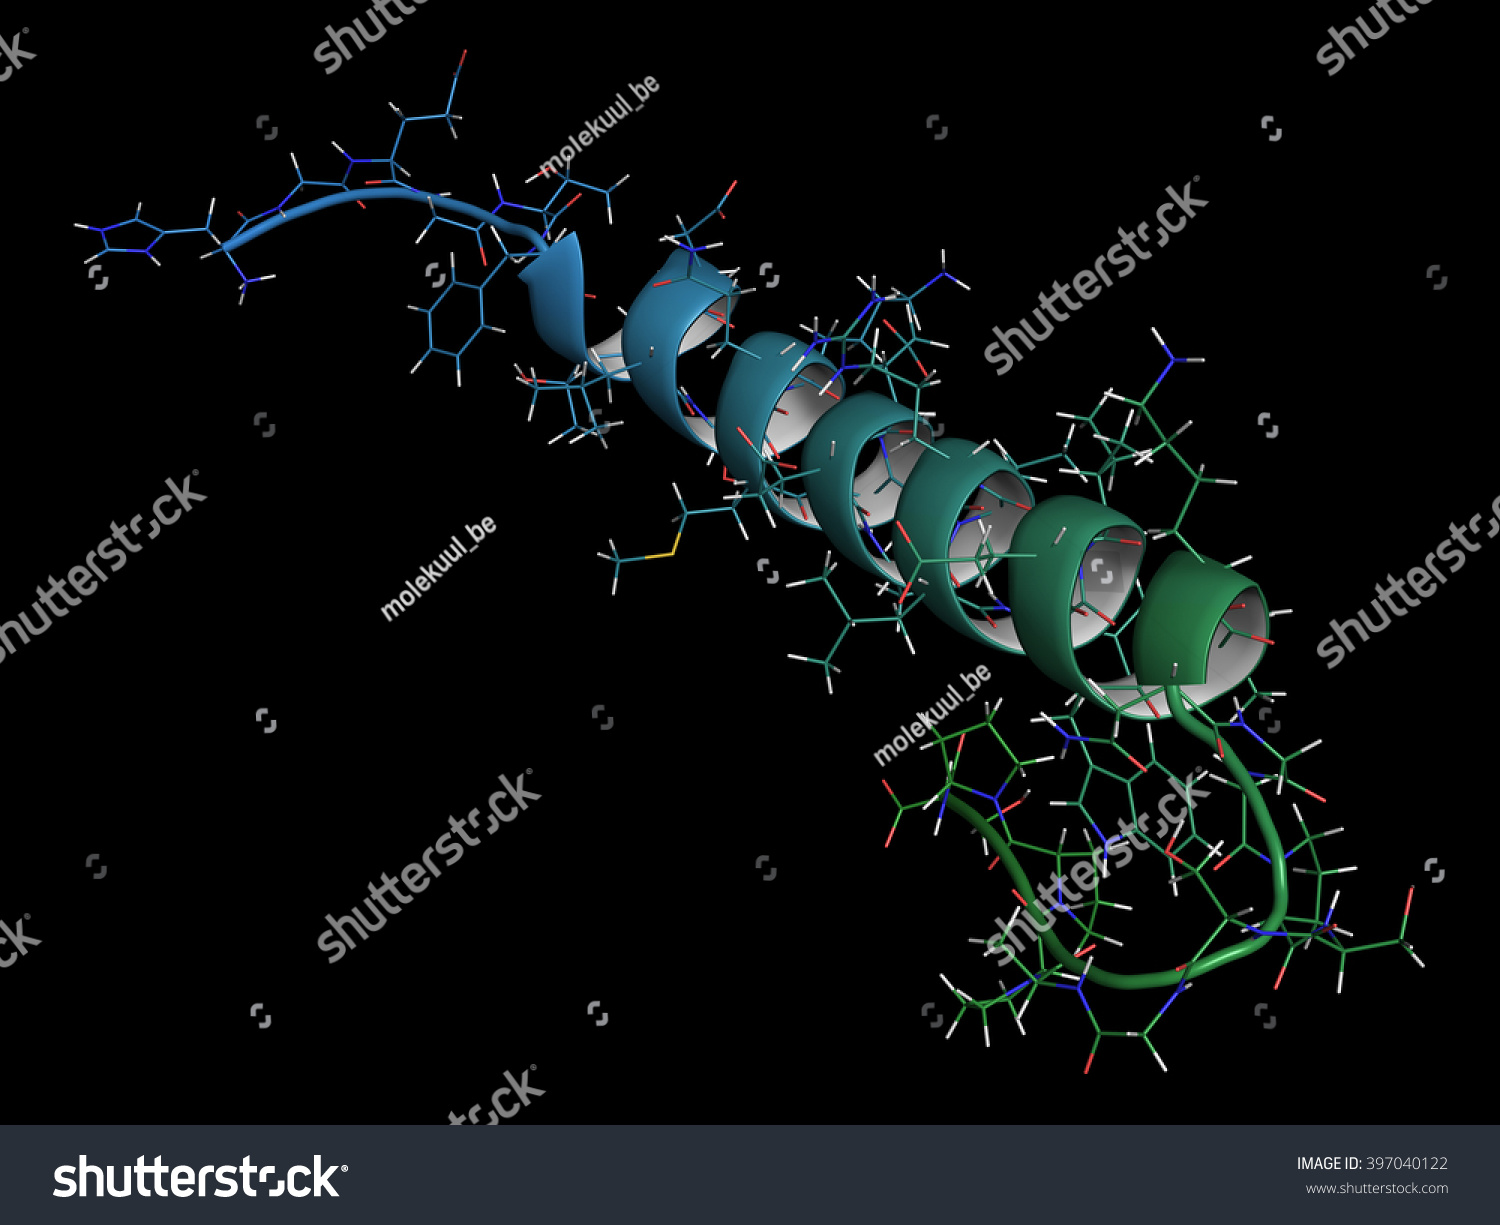 Exenatide diabetes drug molecule. 3D rendering. Cartoon + line representation.